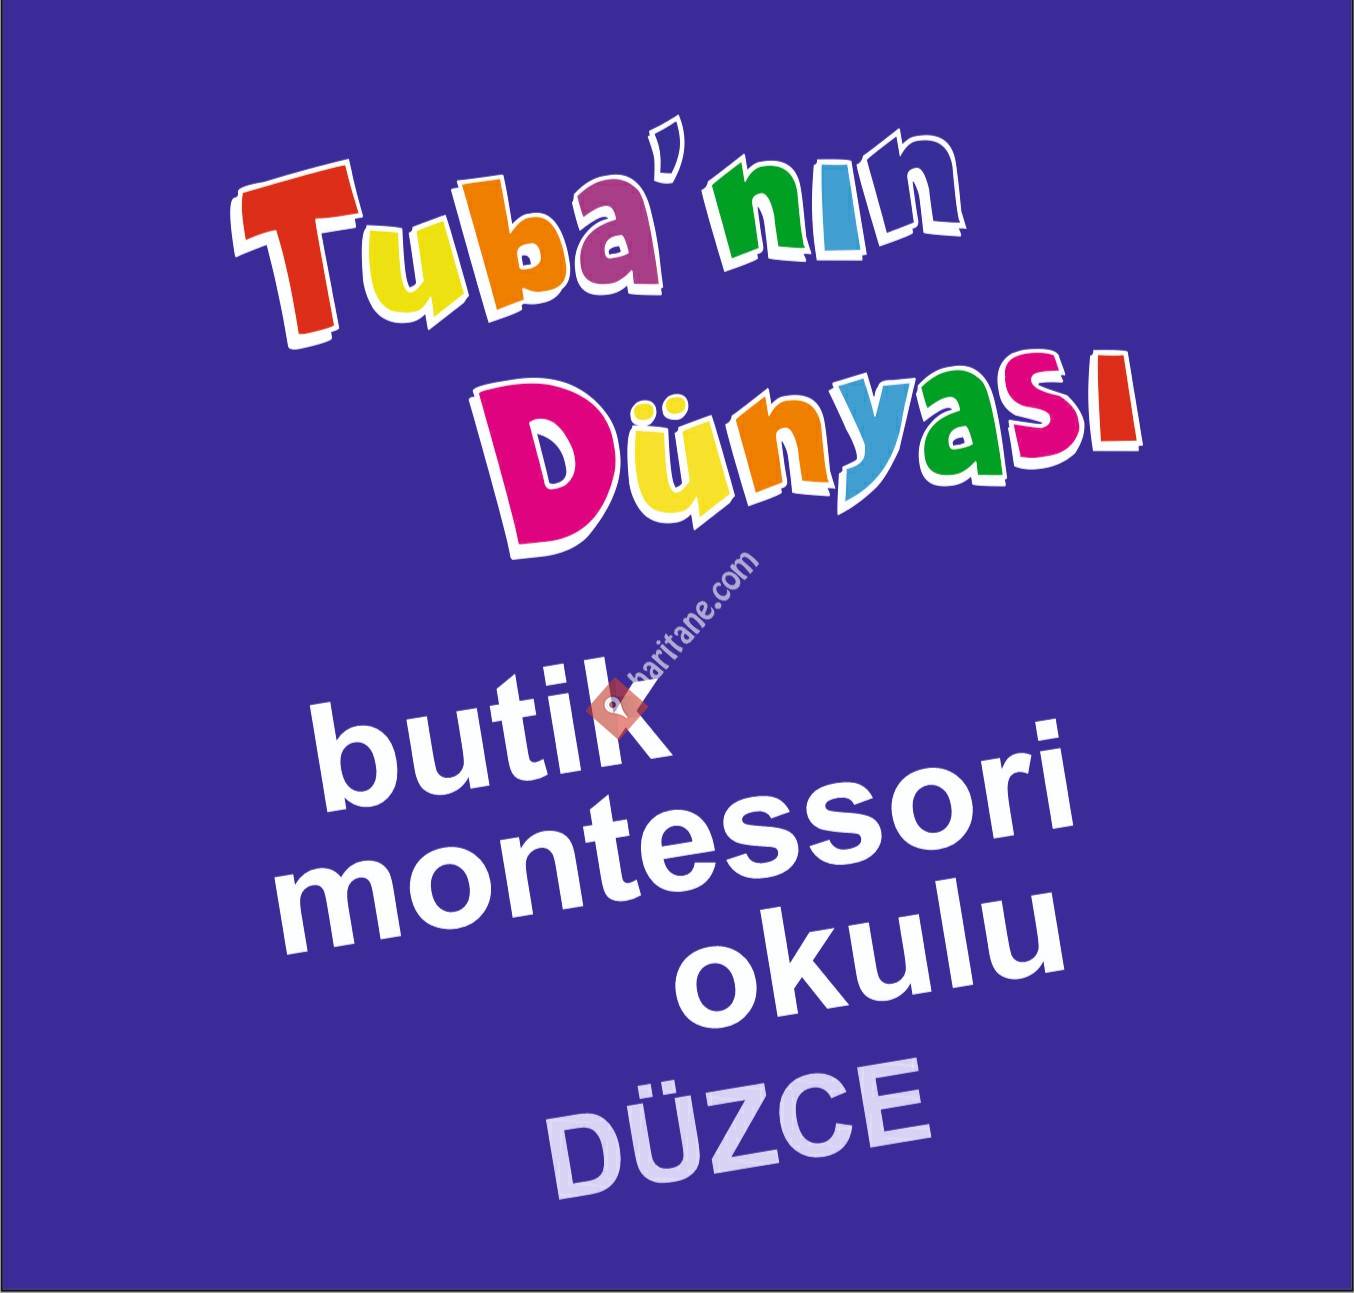 Tuba nın dünyası Butik Montessori Shool